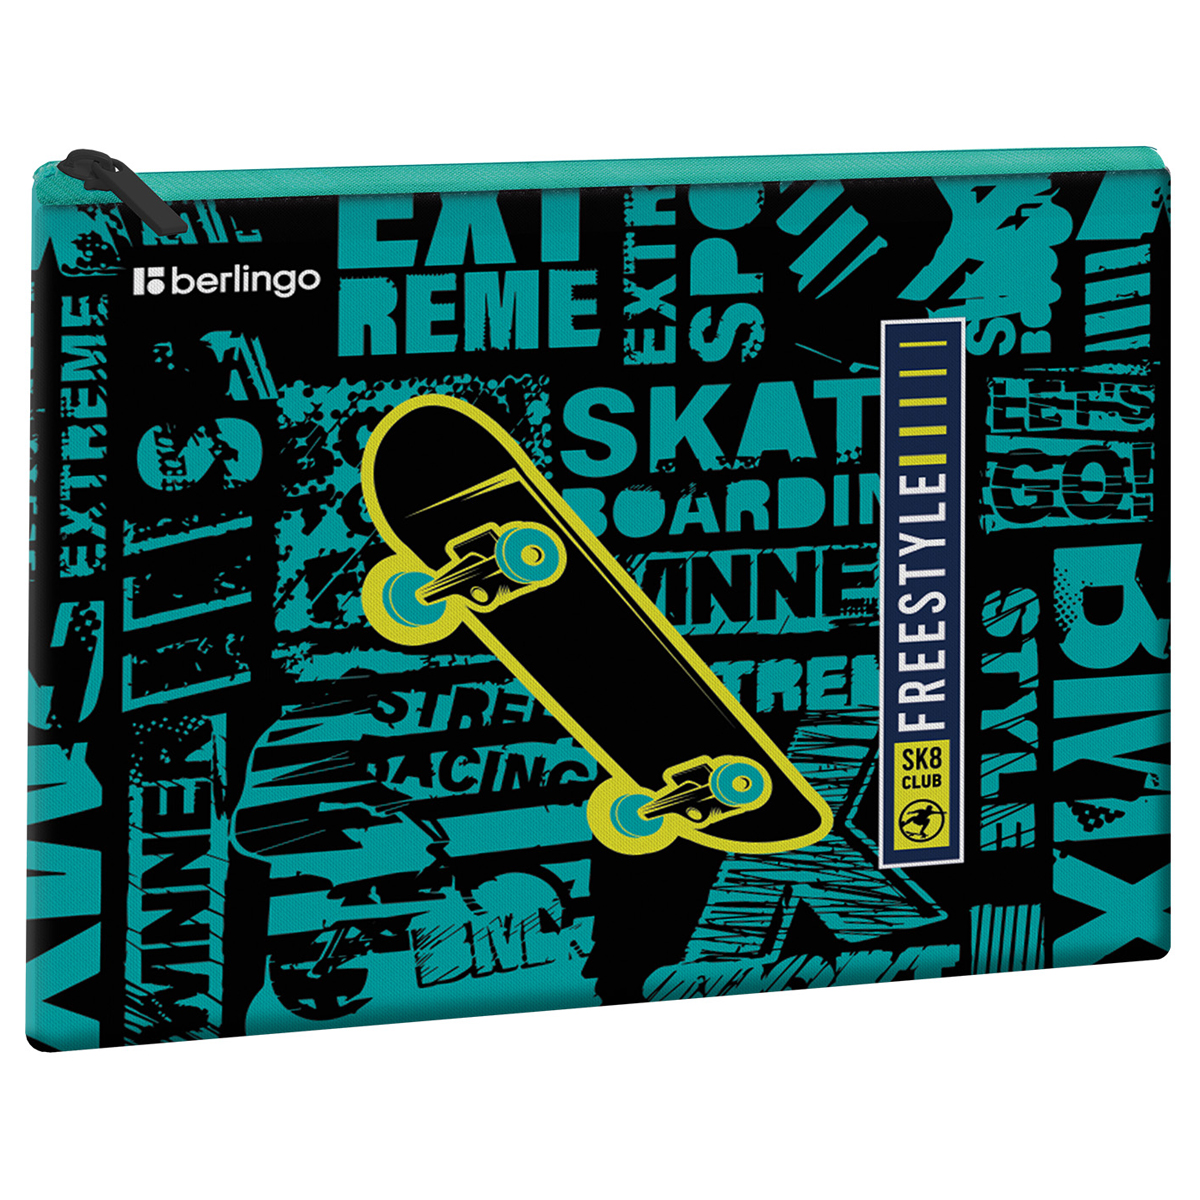  1 , 5 Berlingo "Skateboarding", 255*205, ,   